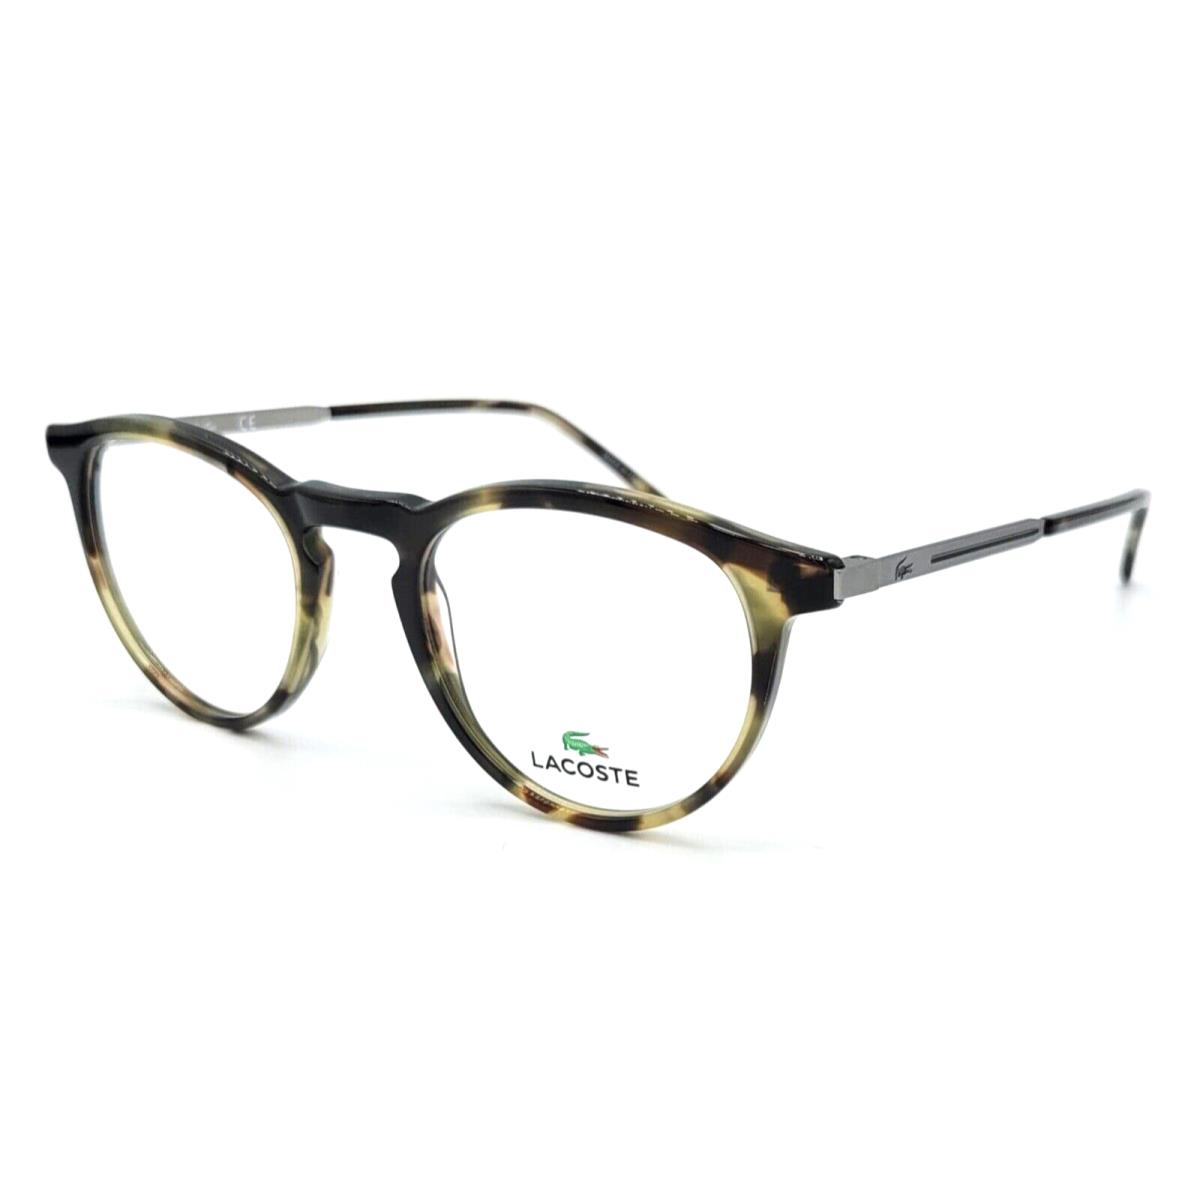 Lacoste - L2872 220 49/20/145 - Brown - Men Eyeglasses - Frame: Brown